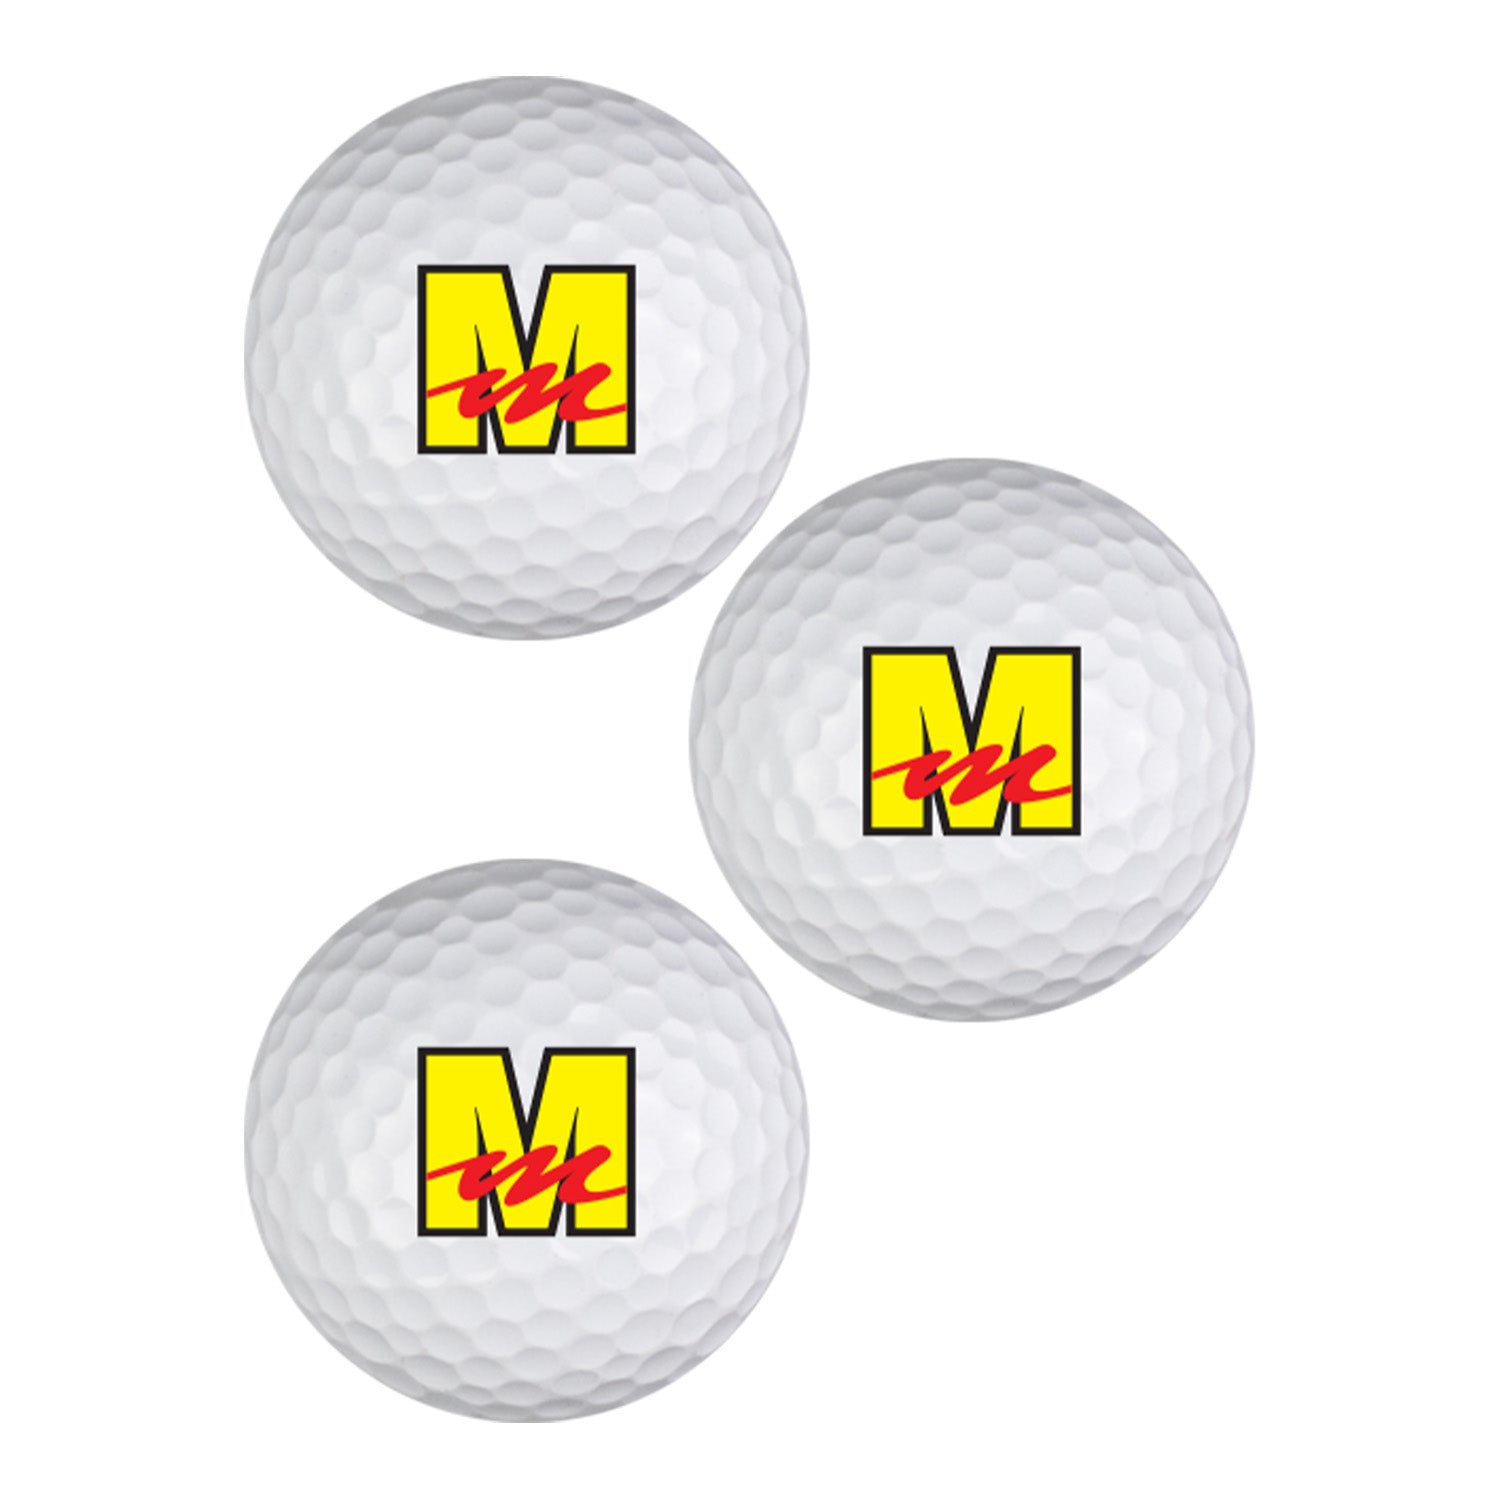 Mecum Auction Golf Ball 3 Pack - Front View